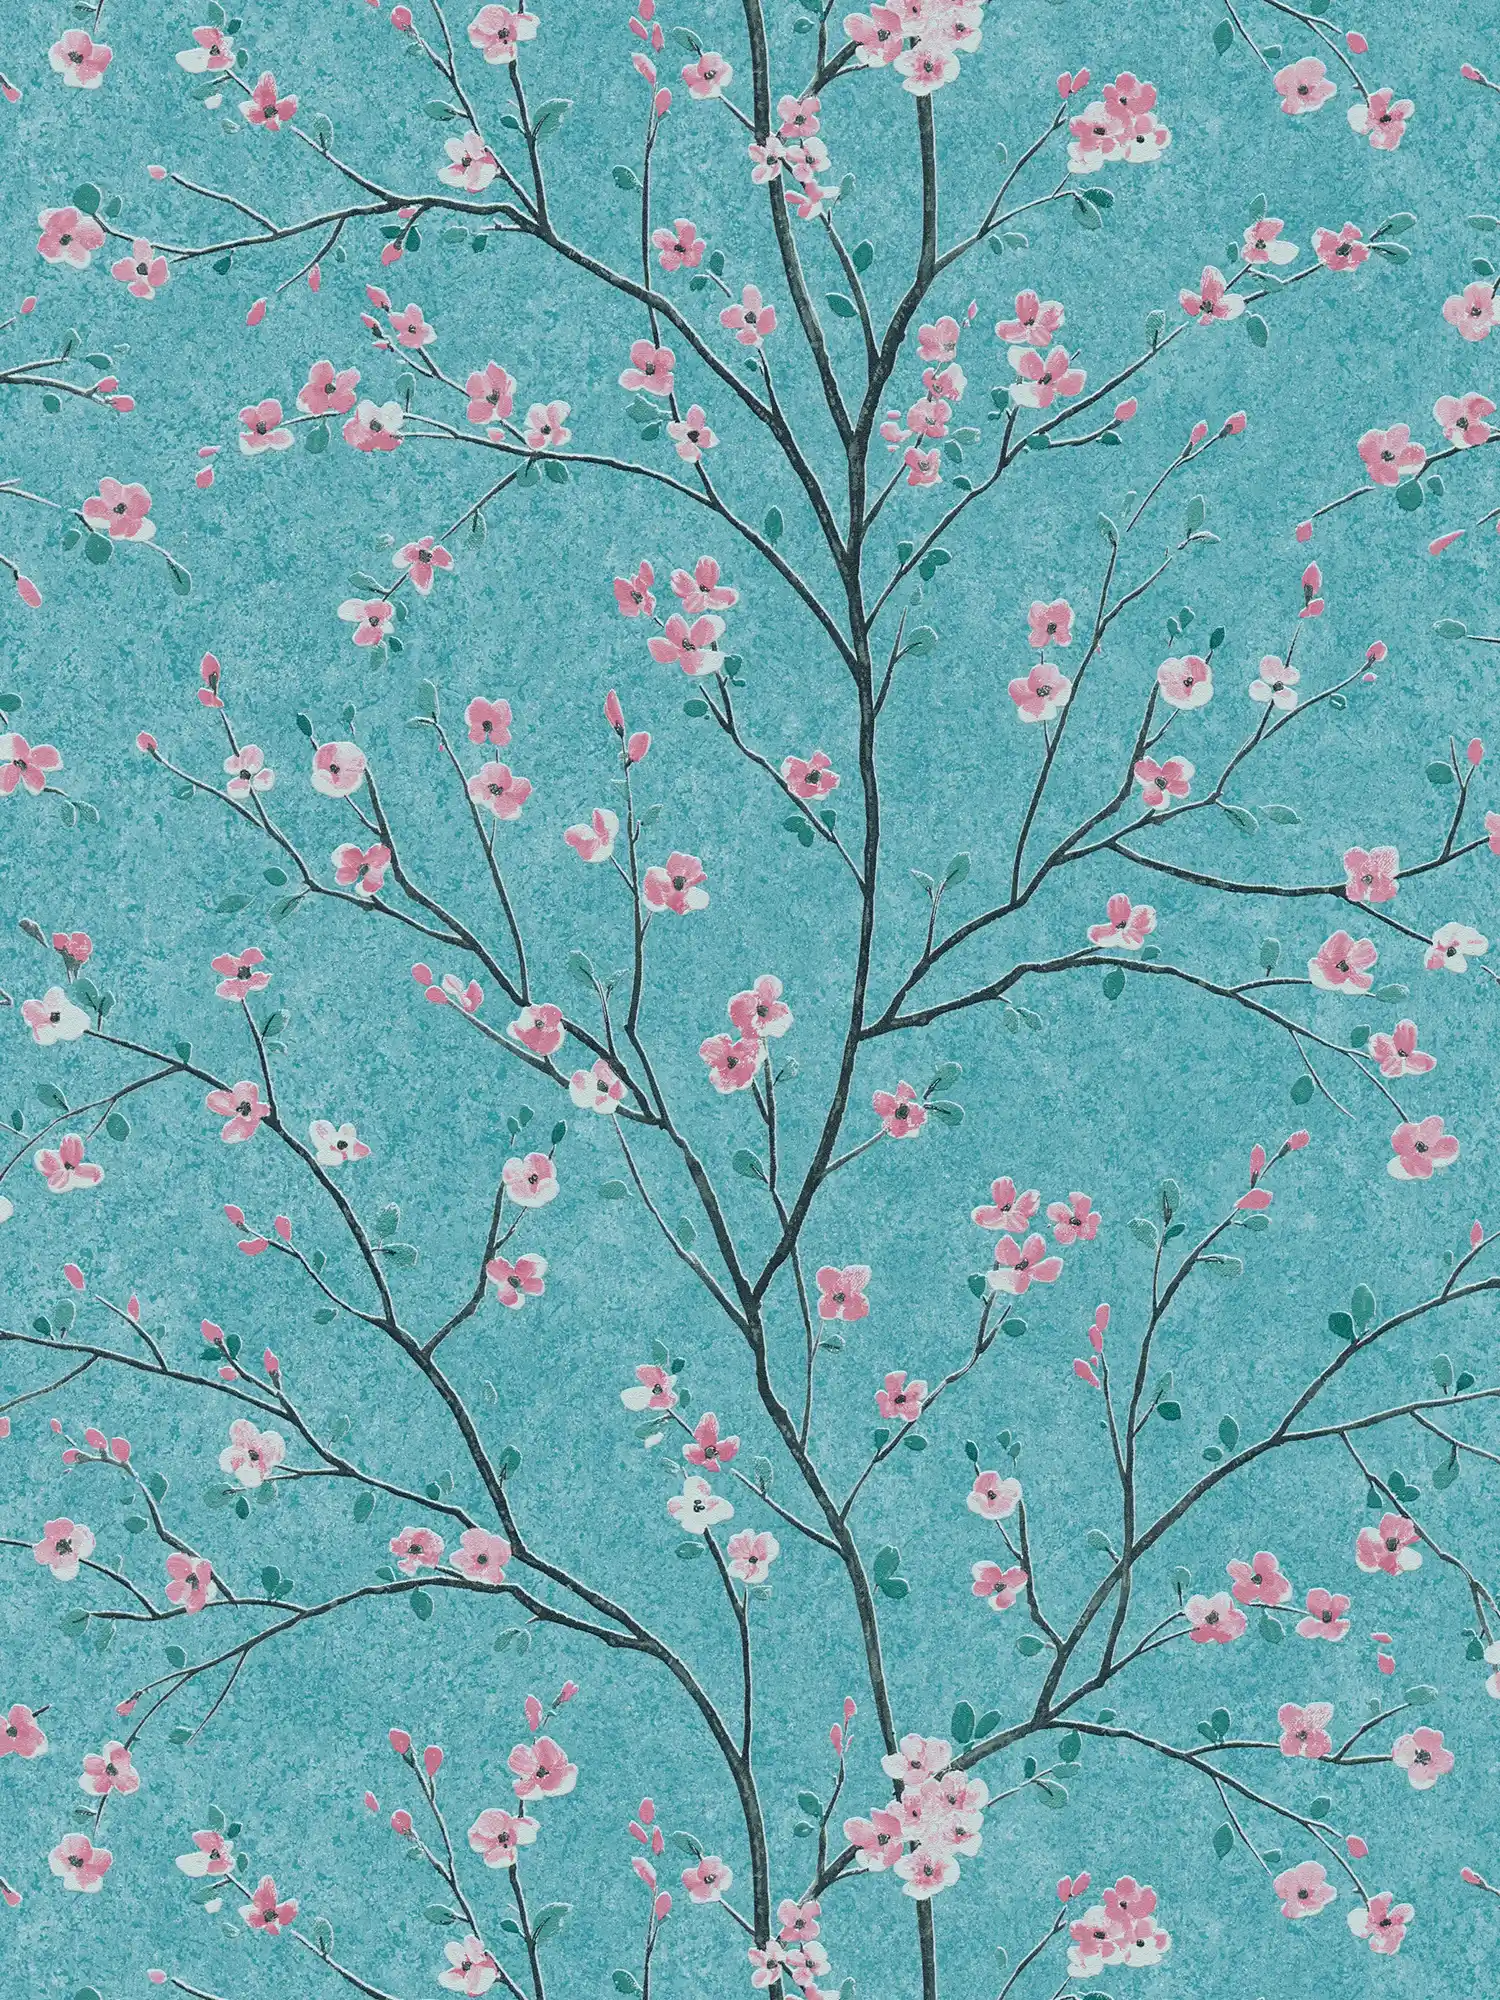         Japanese cherry blossom wallpaper - blue, green, pink
    